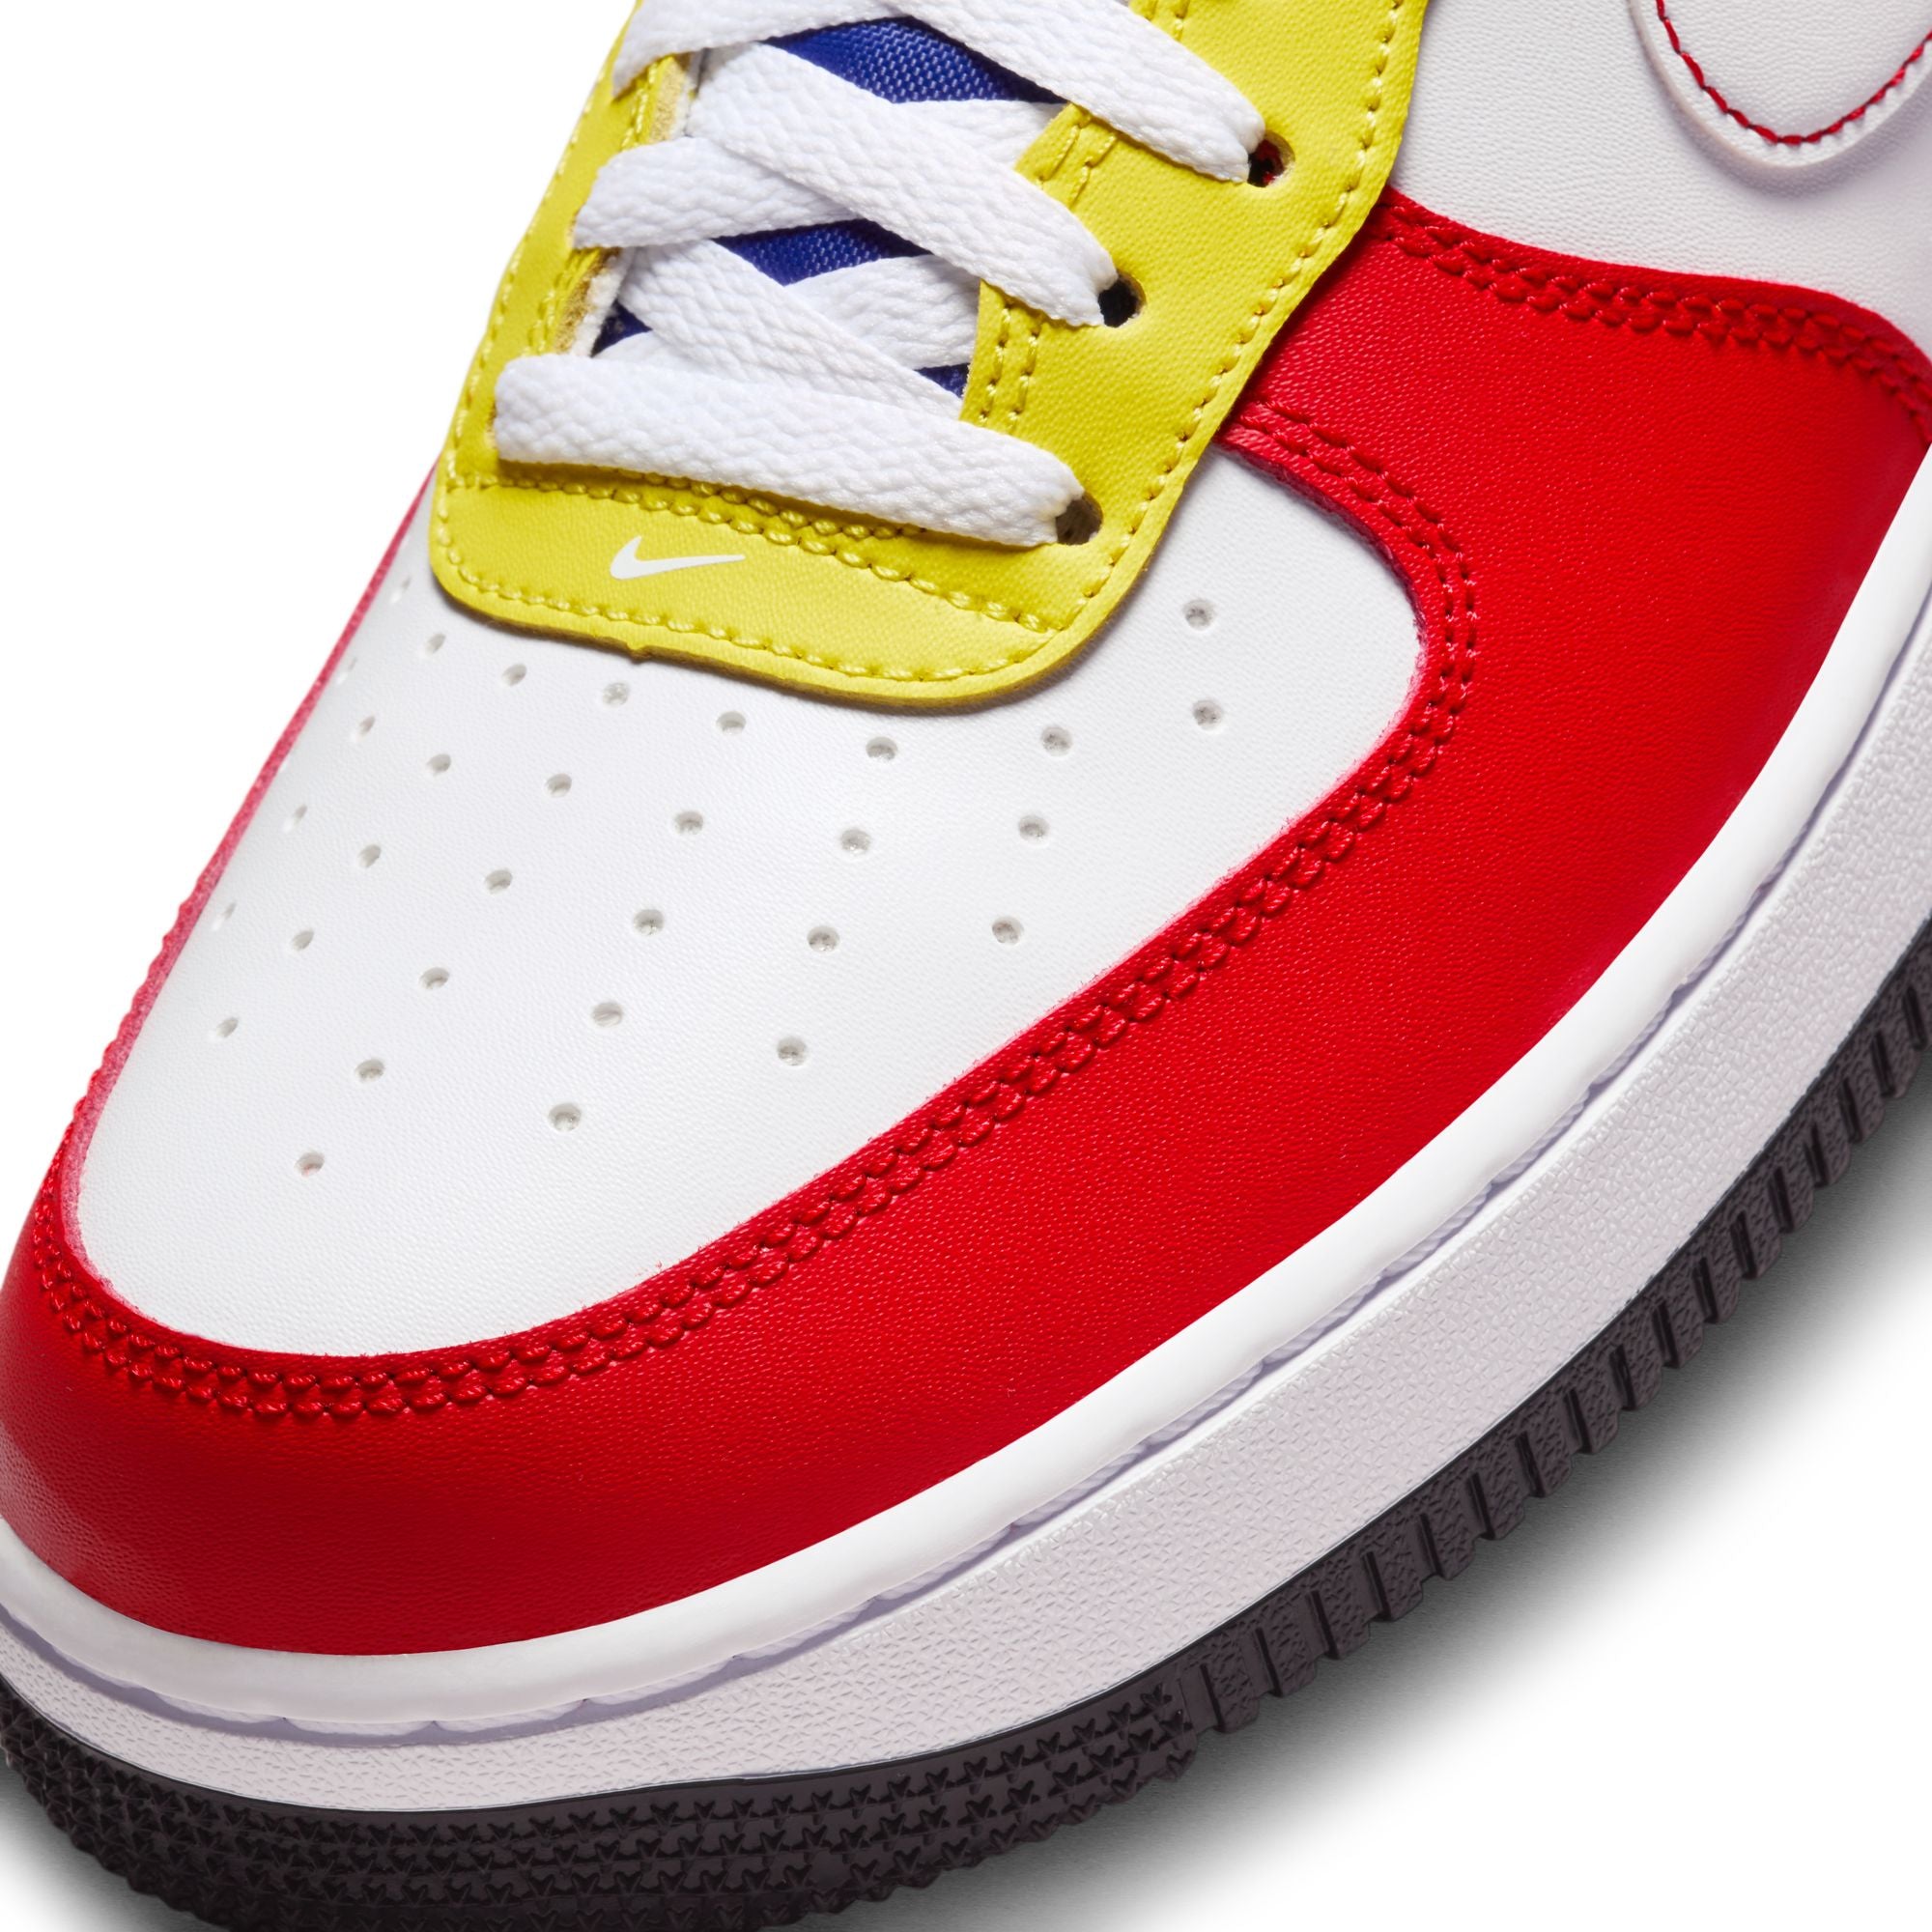 Nike Air Force 1 Low LV8 Shoes 11.5 Men University Red Croc